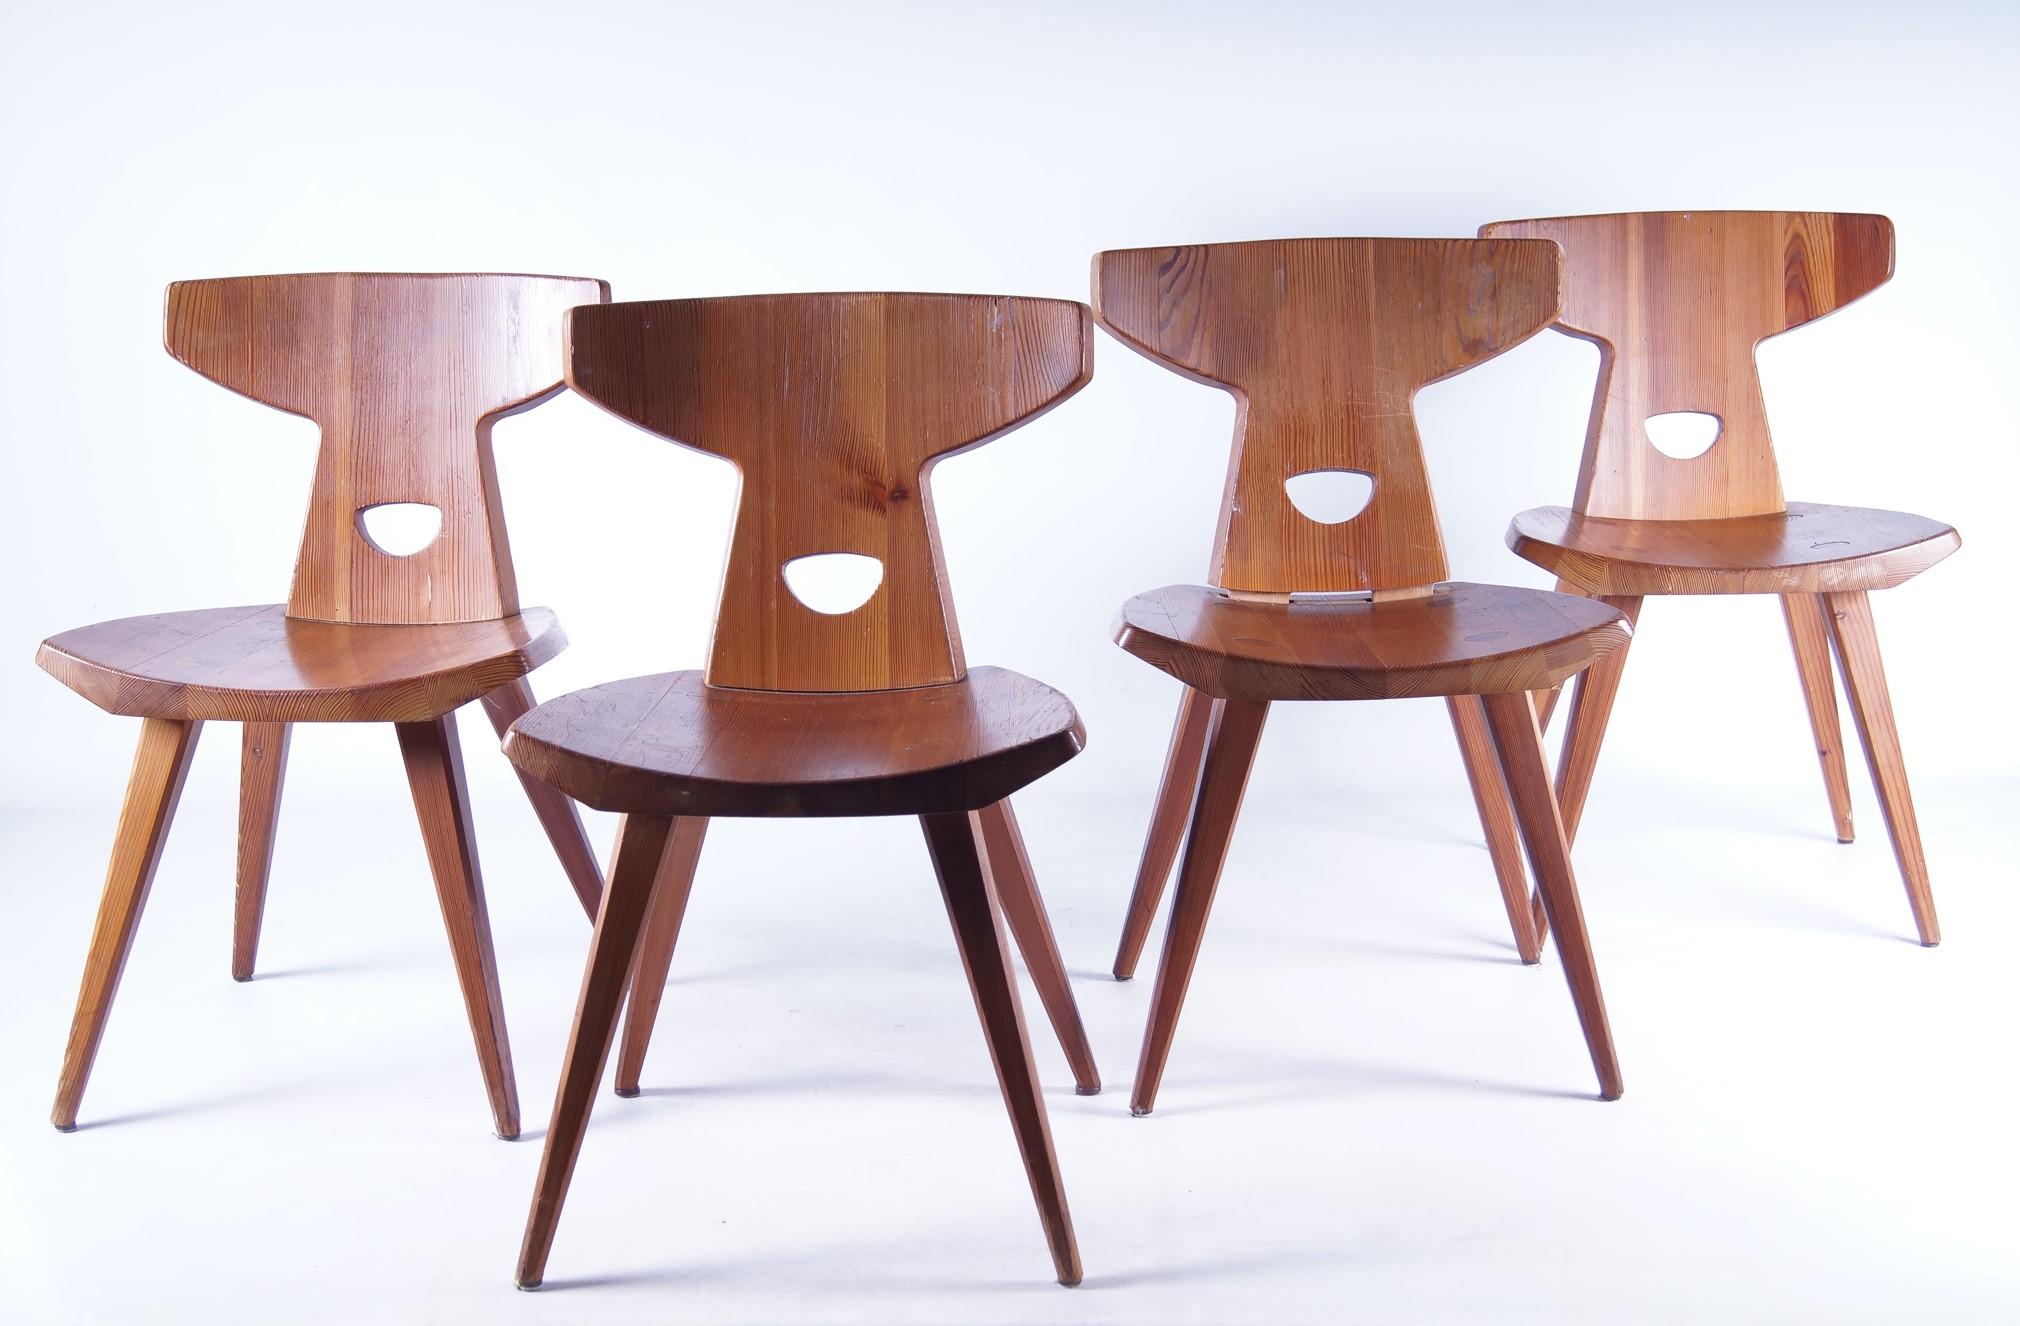 1960s Jacob Kielland-Brandt dining room chairs for I. Christiansen set of 4

Designer: Jacob Kielland-Brandt

Manufacturer: I. Christiansen

Period: 1960's

Origin: Denmark

Material: Fir wood

Color: Pine

Condition: